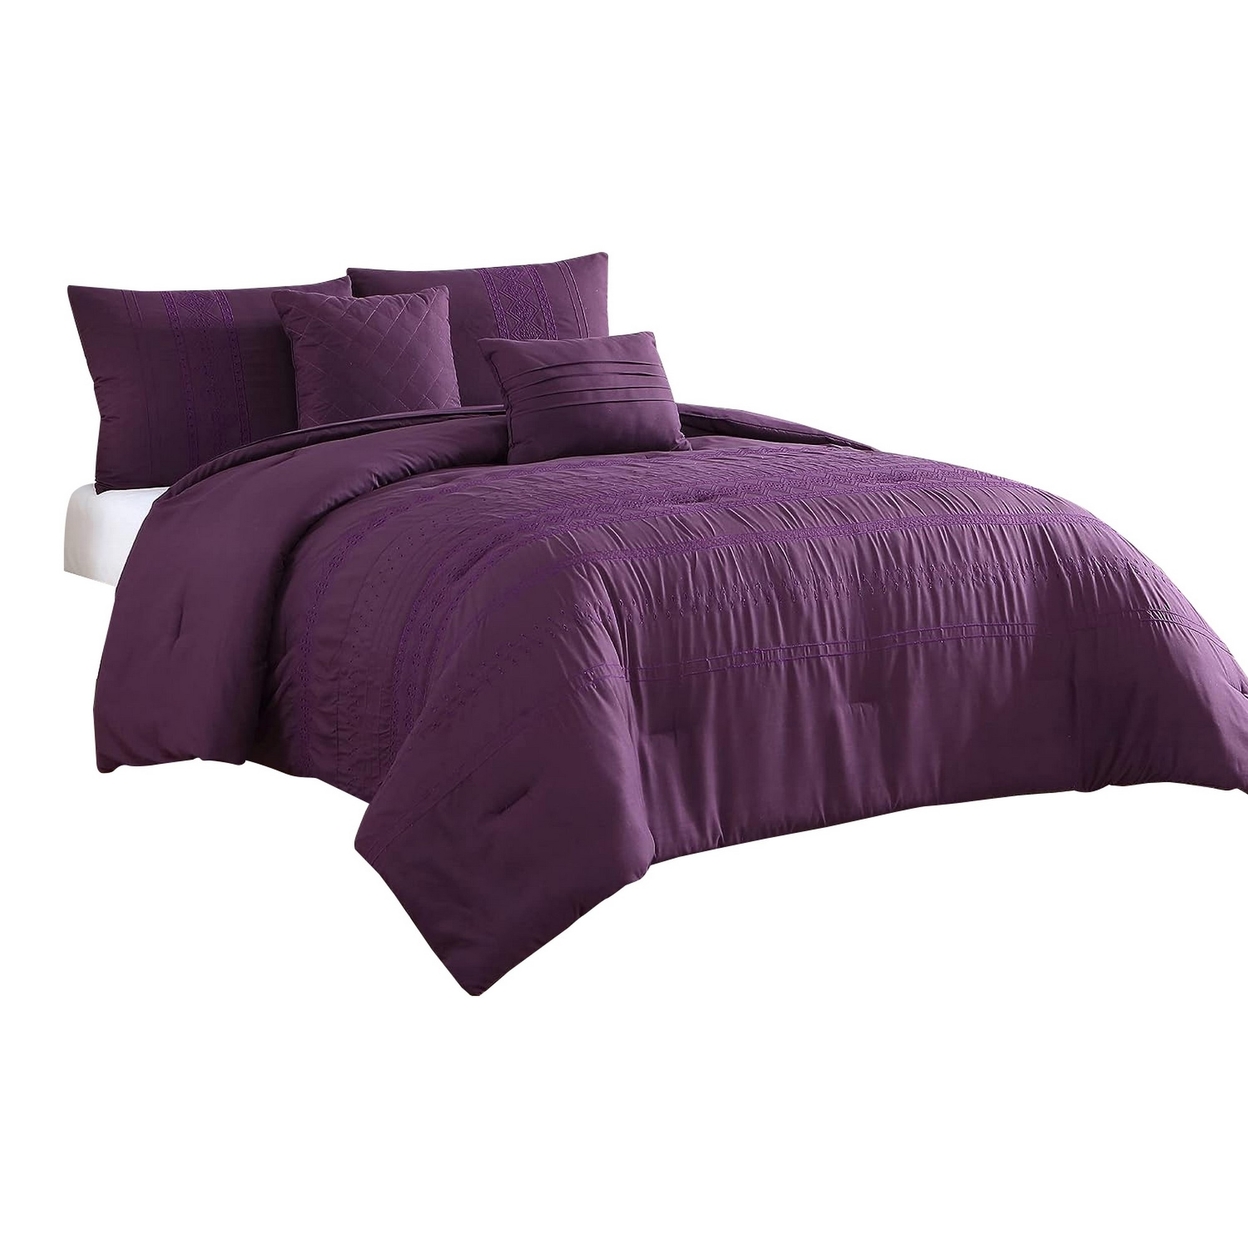 Elva 5pc Queen Comforter Set, Wrinkle Pattern, Purple By The Urban Port- Saltoro Sherpi